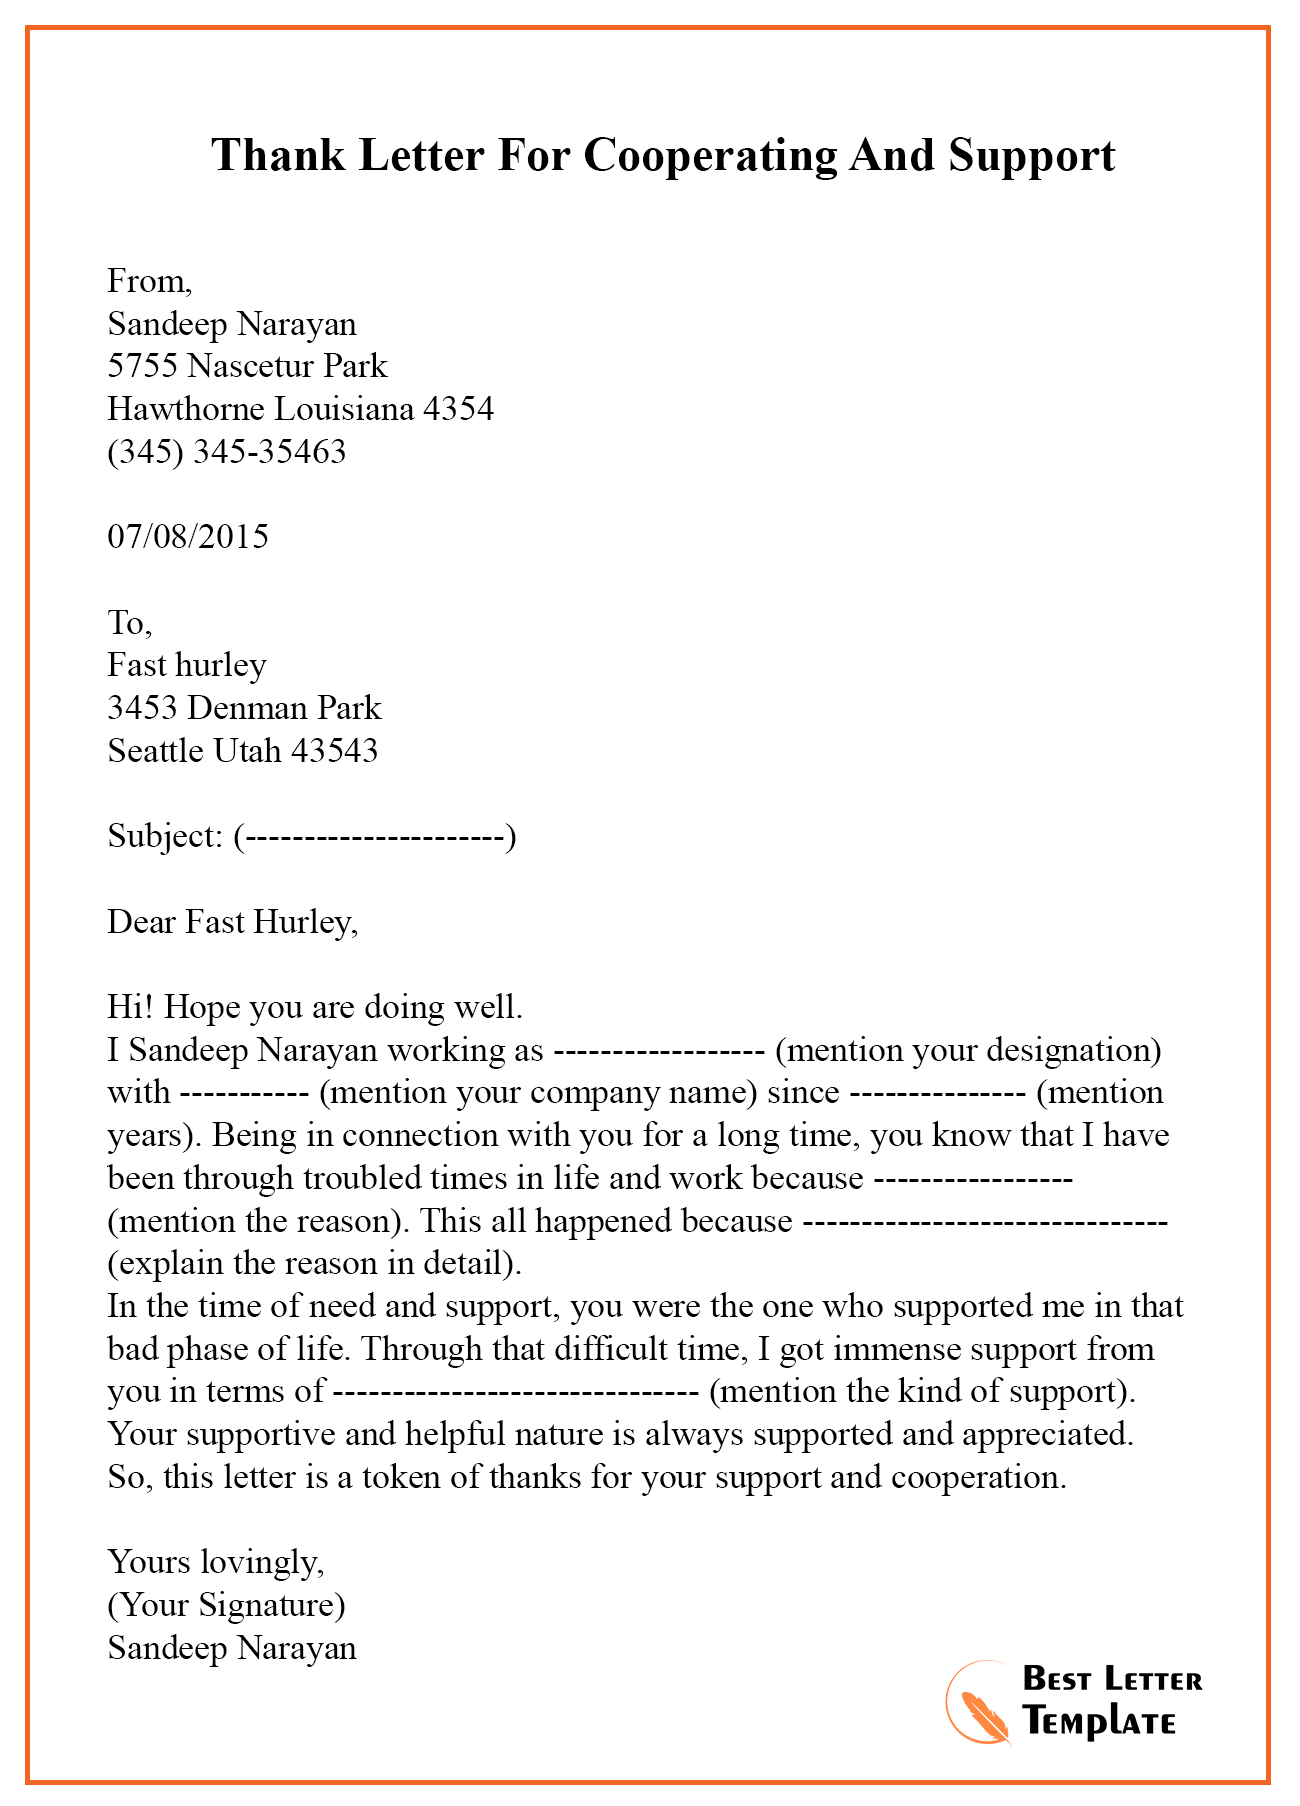 Sample Letter Of Appreciation For Support from bestlettertemplate.com